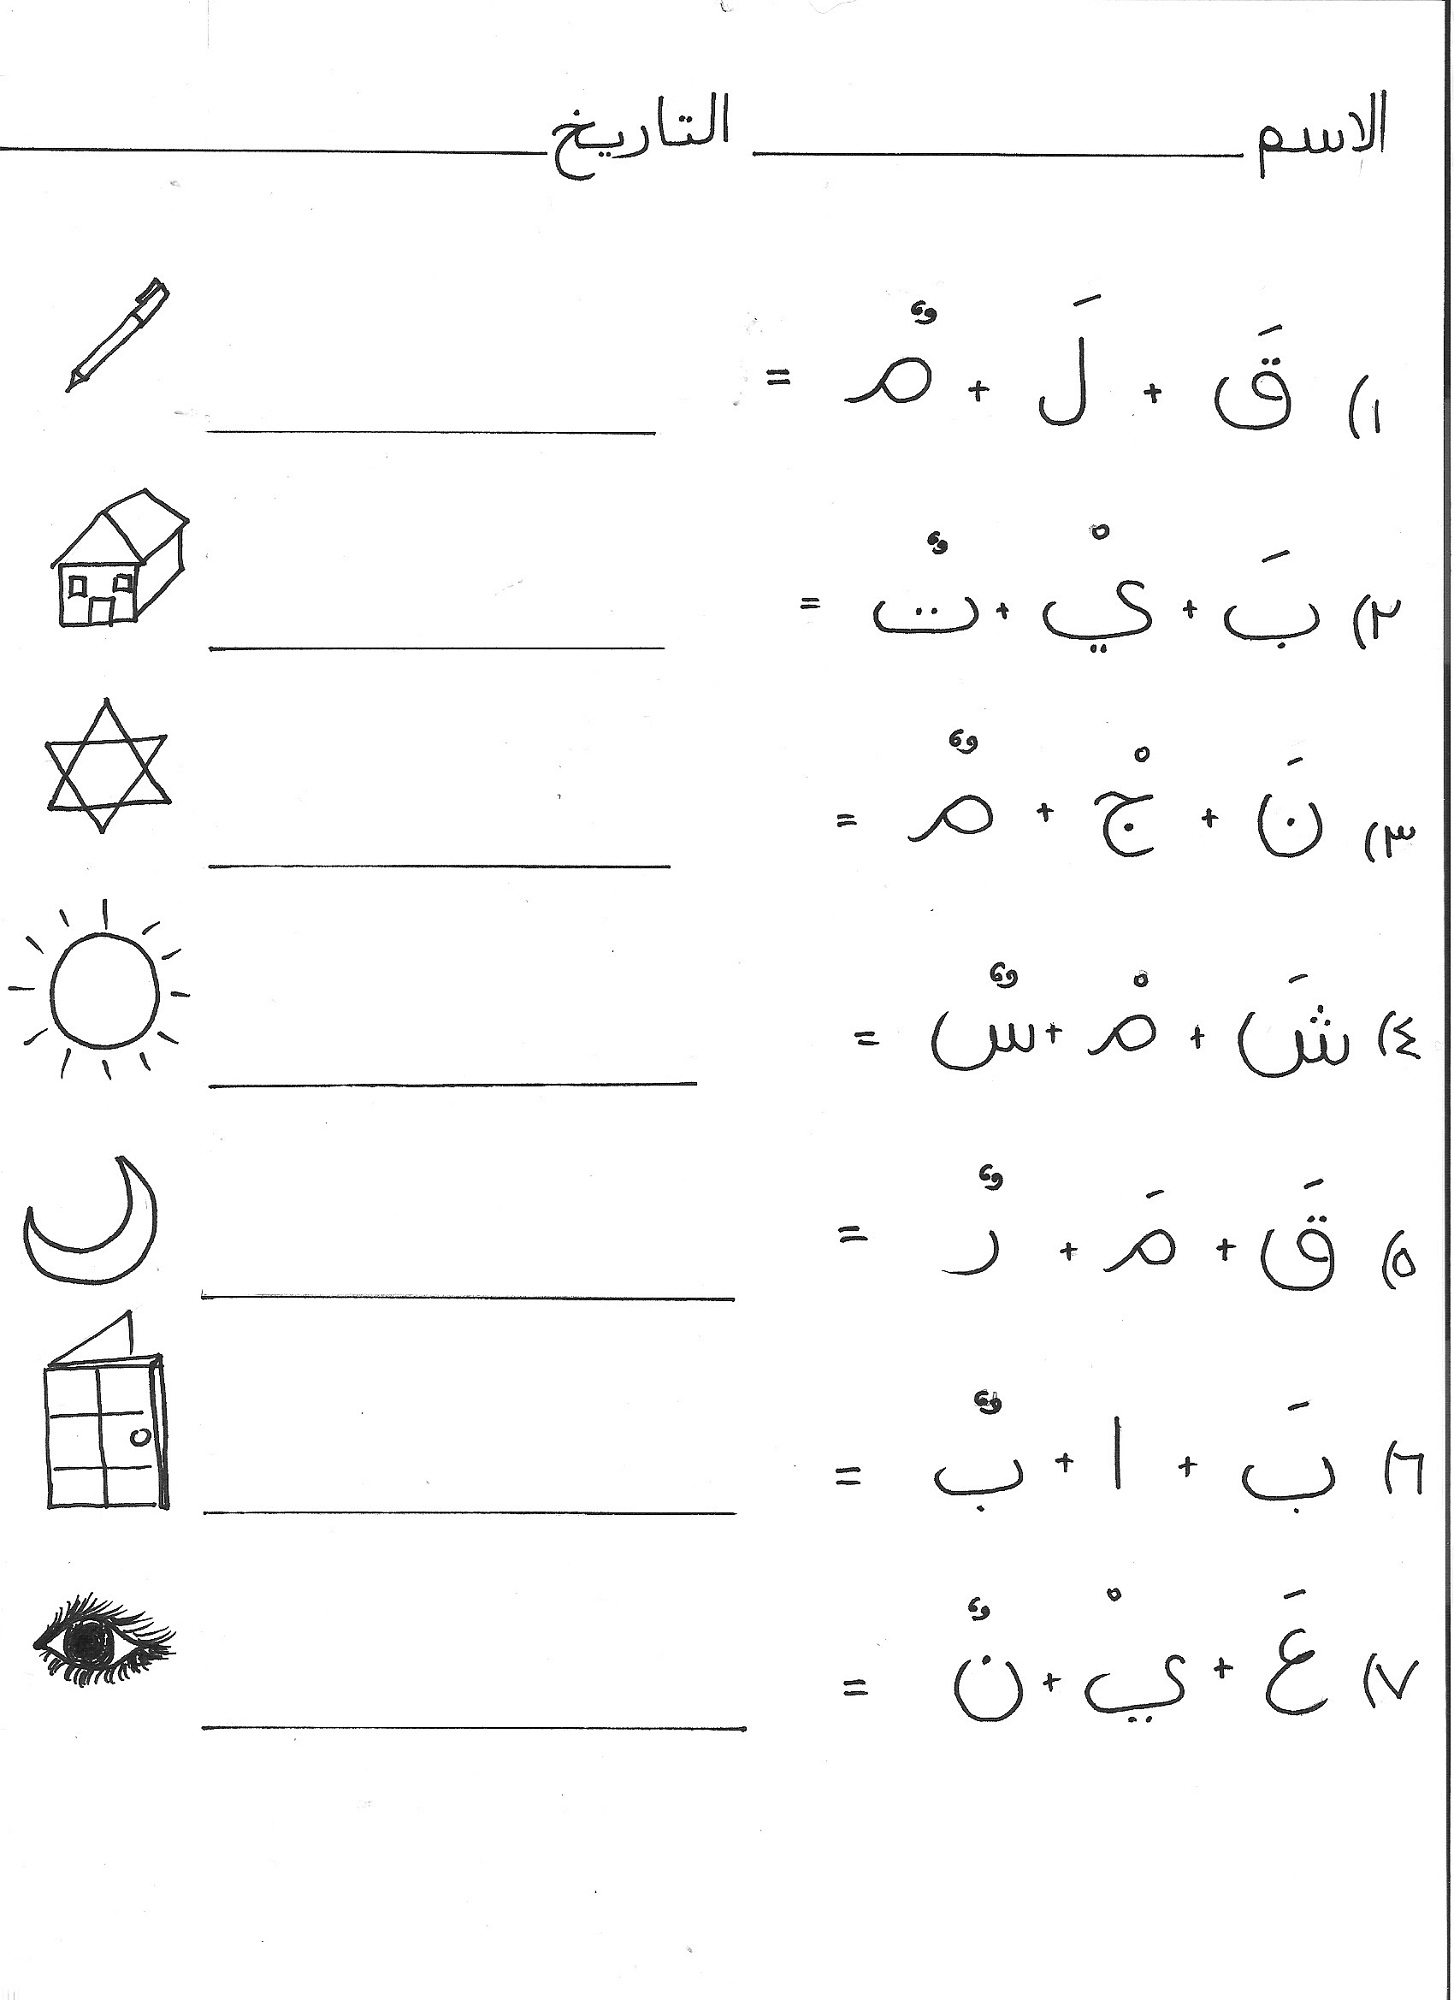 Printable Arabic Handwriting Practice Worksheets - Printable Word Searches